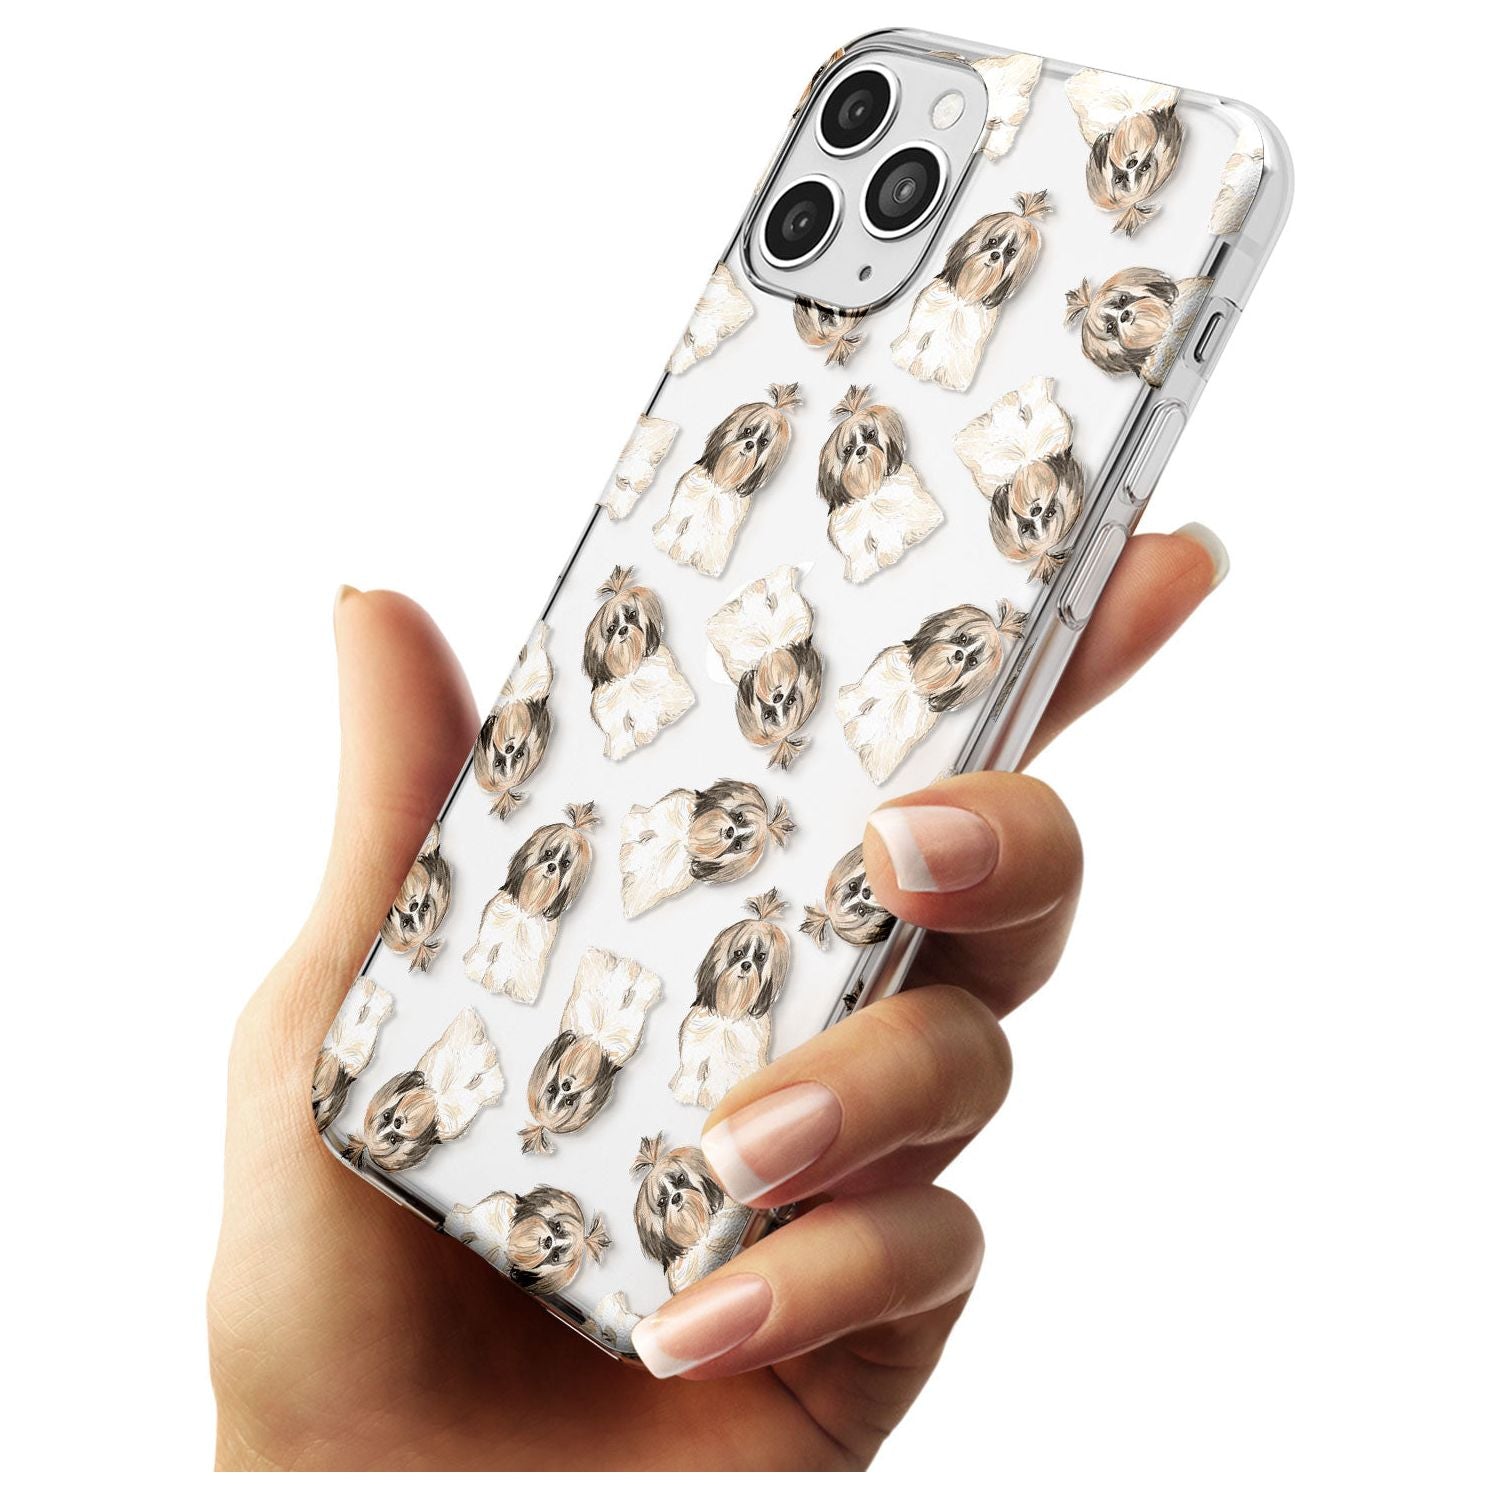 Shih tzu (Long Hair) Watercolour Dog Pattern Slim TPU Phone Case for iPhone 11 Pro Max